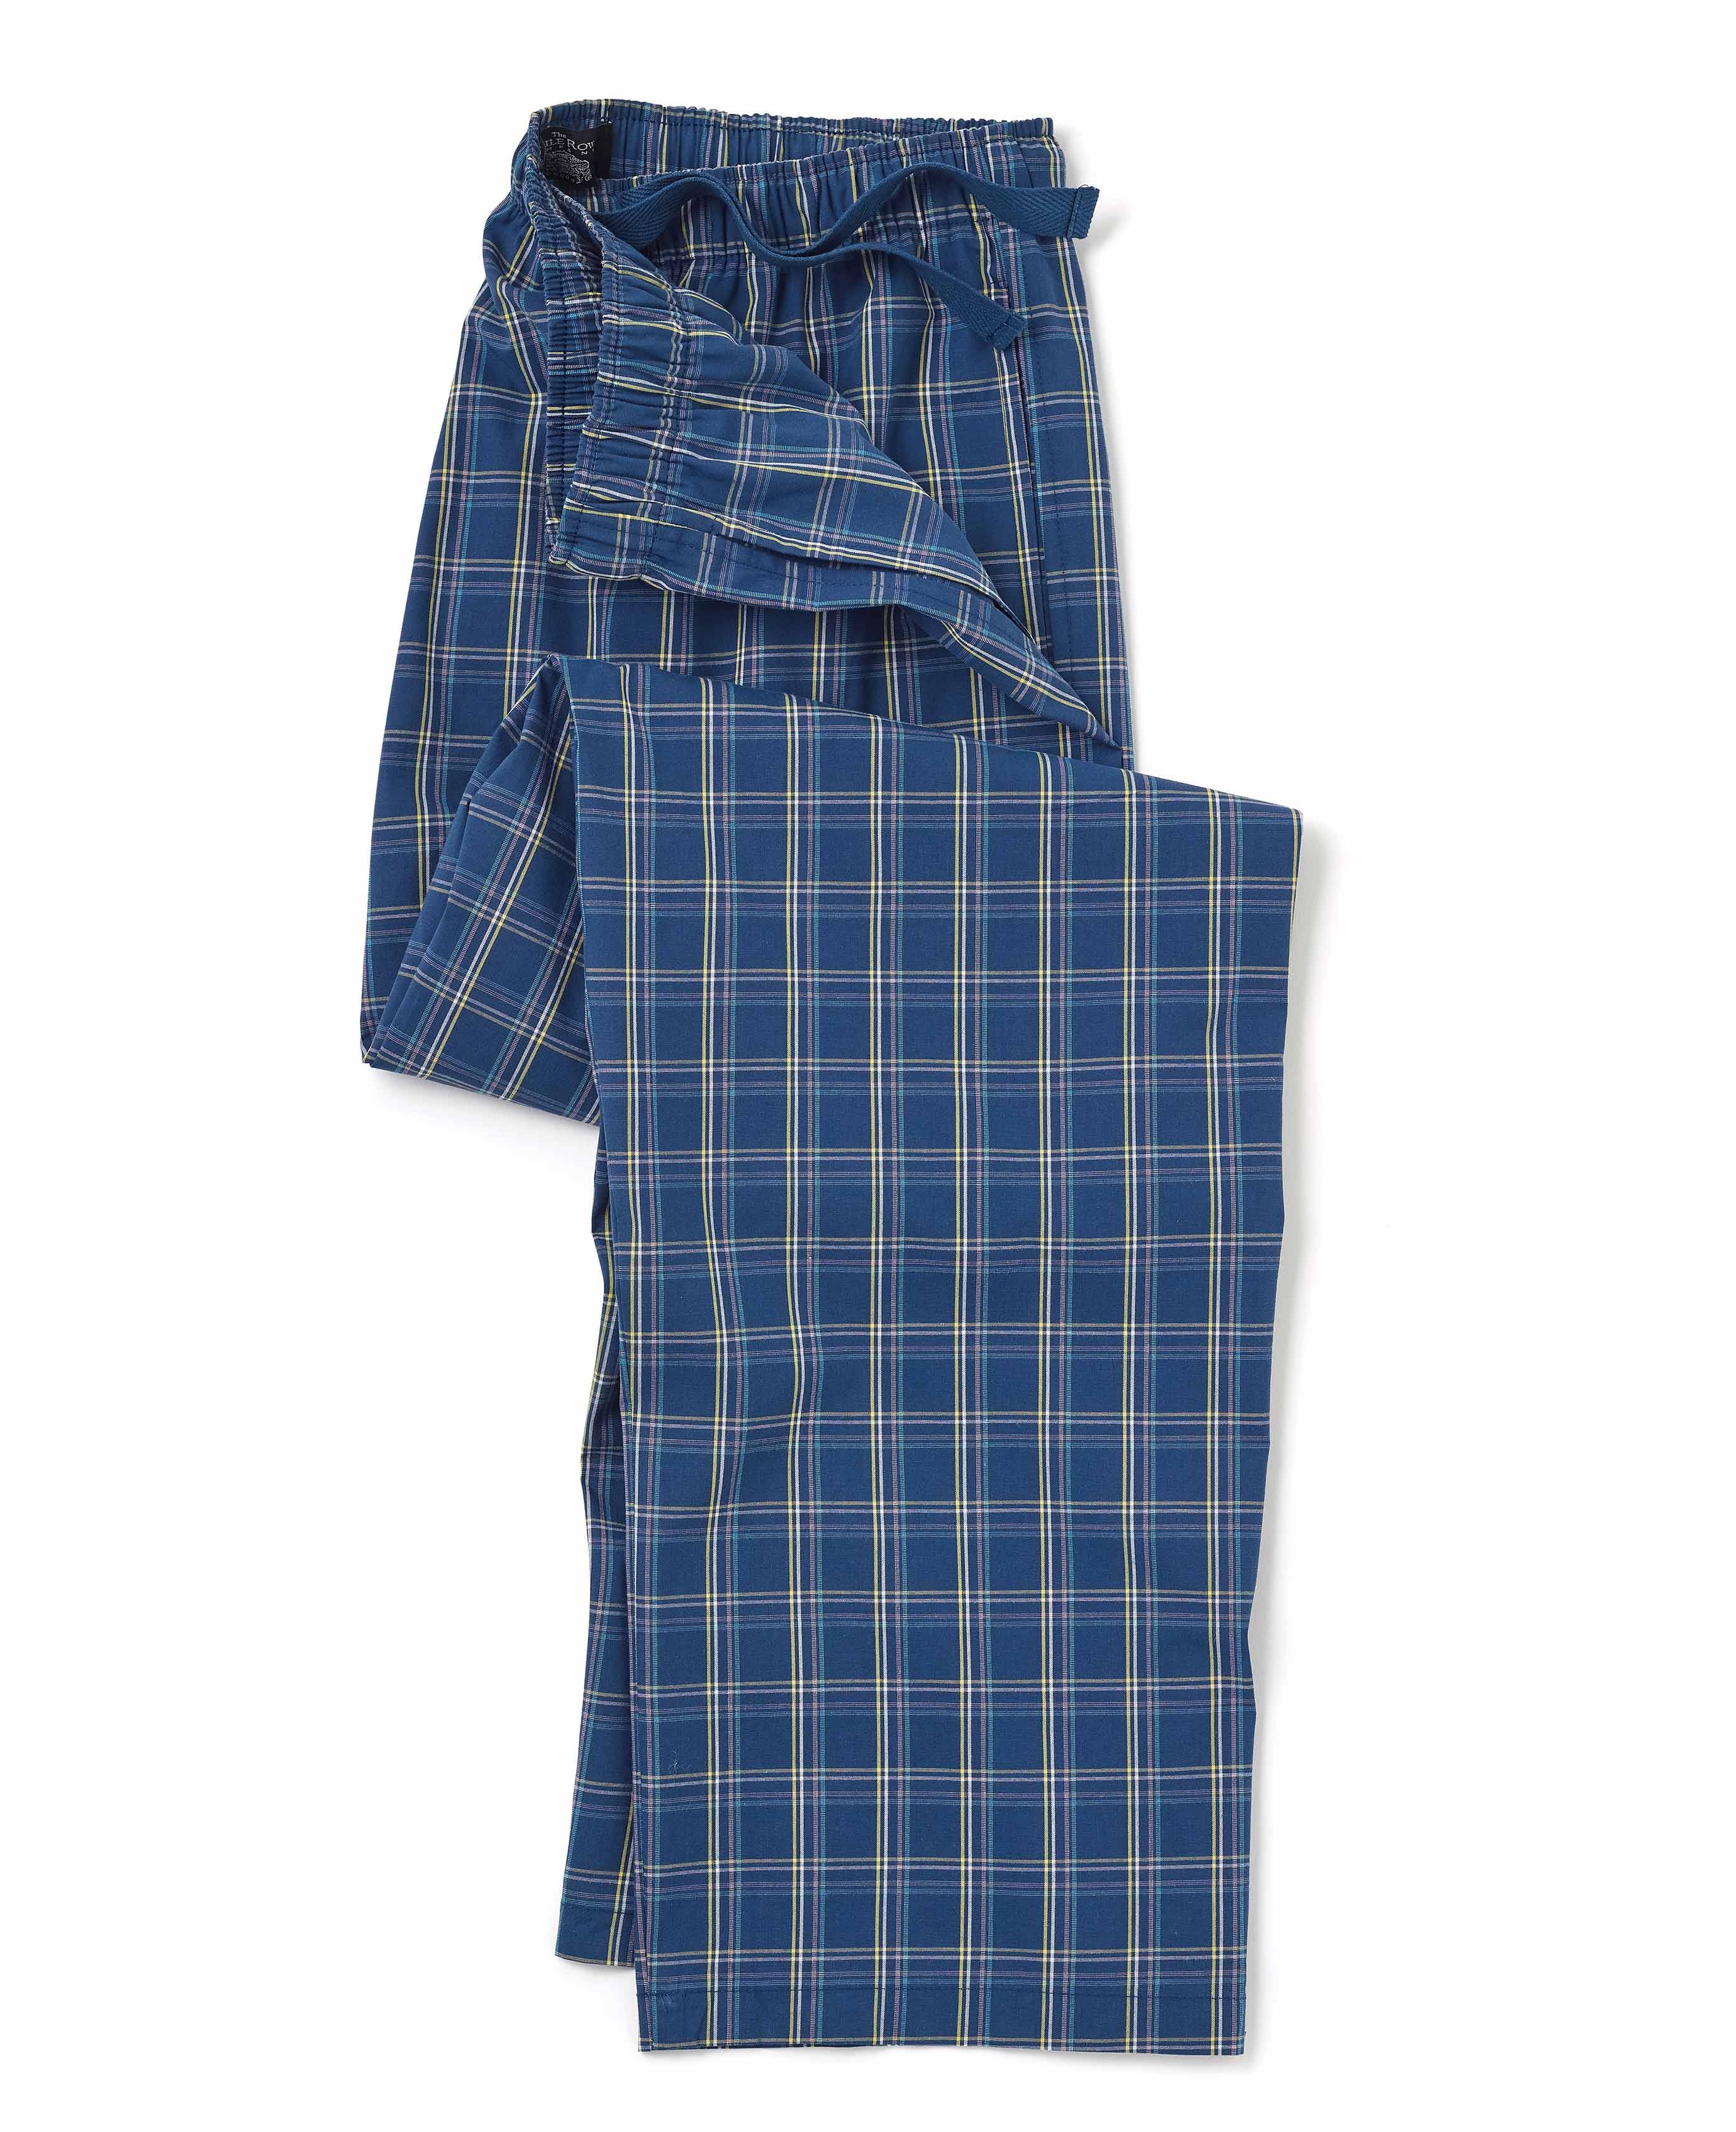 Mayfair Blue Pajama Pants for Women